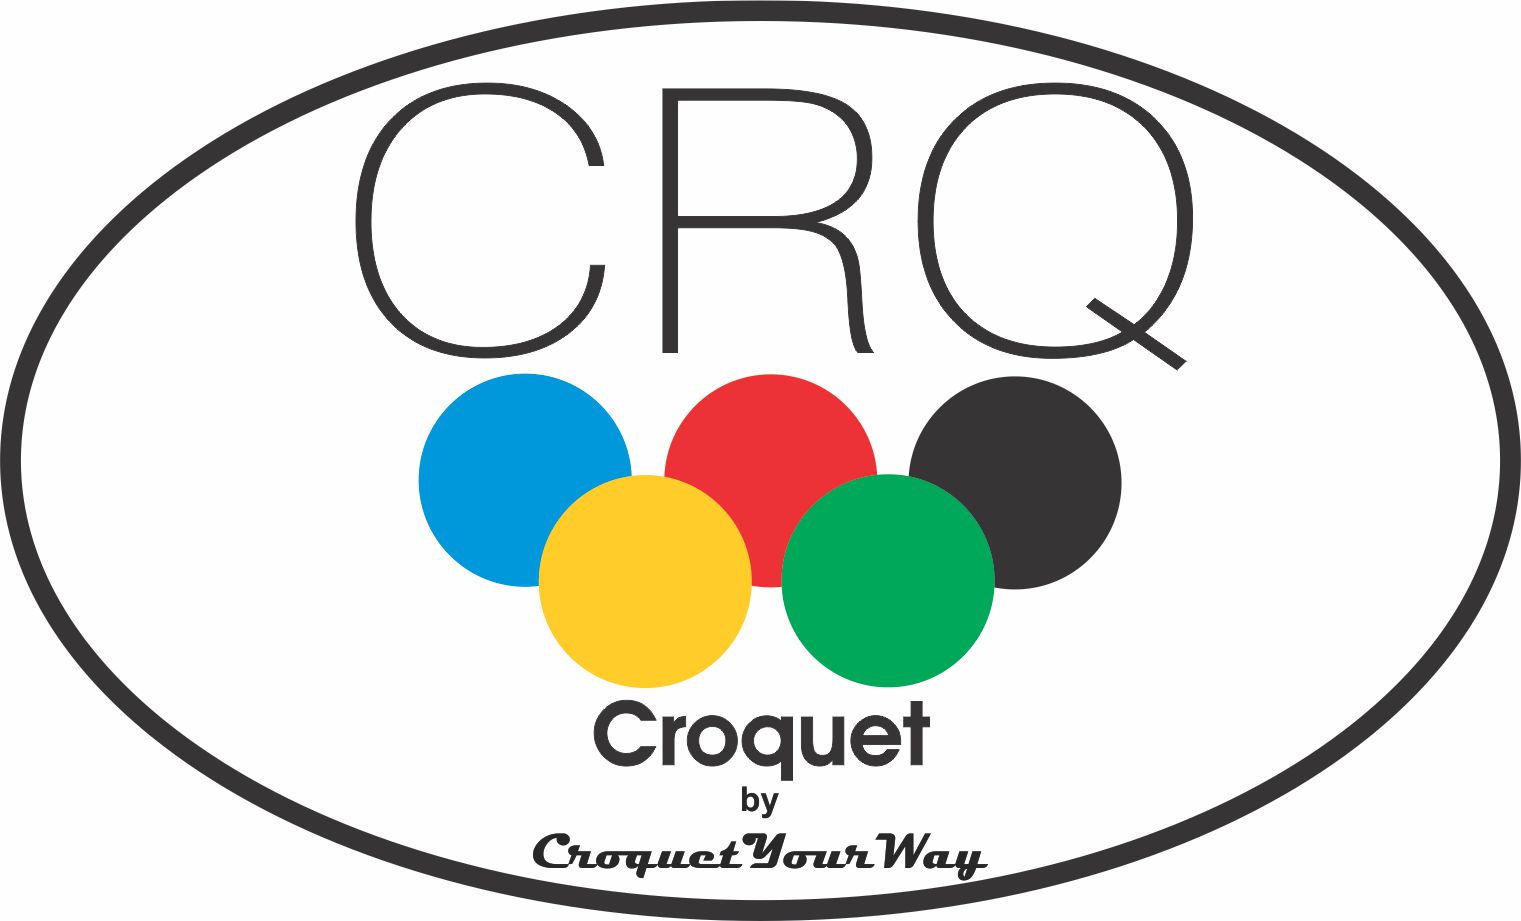 CRQ 510 Croquet Balls CRQ PRO-BALZ, USA, Classic, High Action, 10.8 oz 6 Ball Set (BRBYGO)